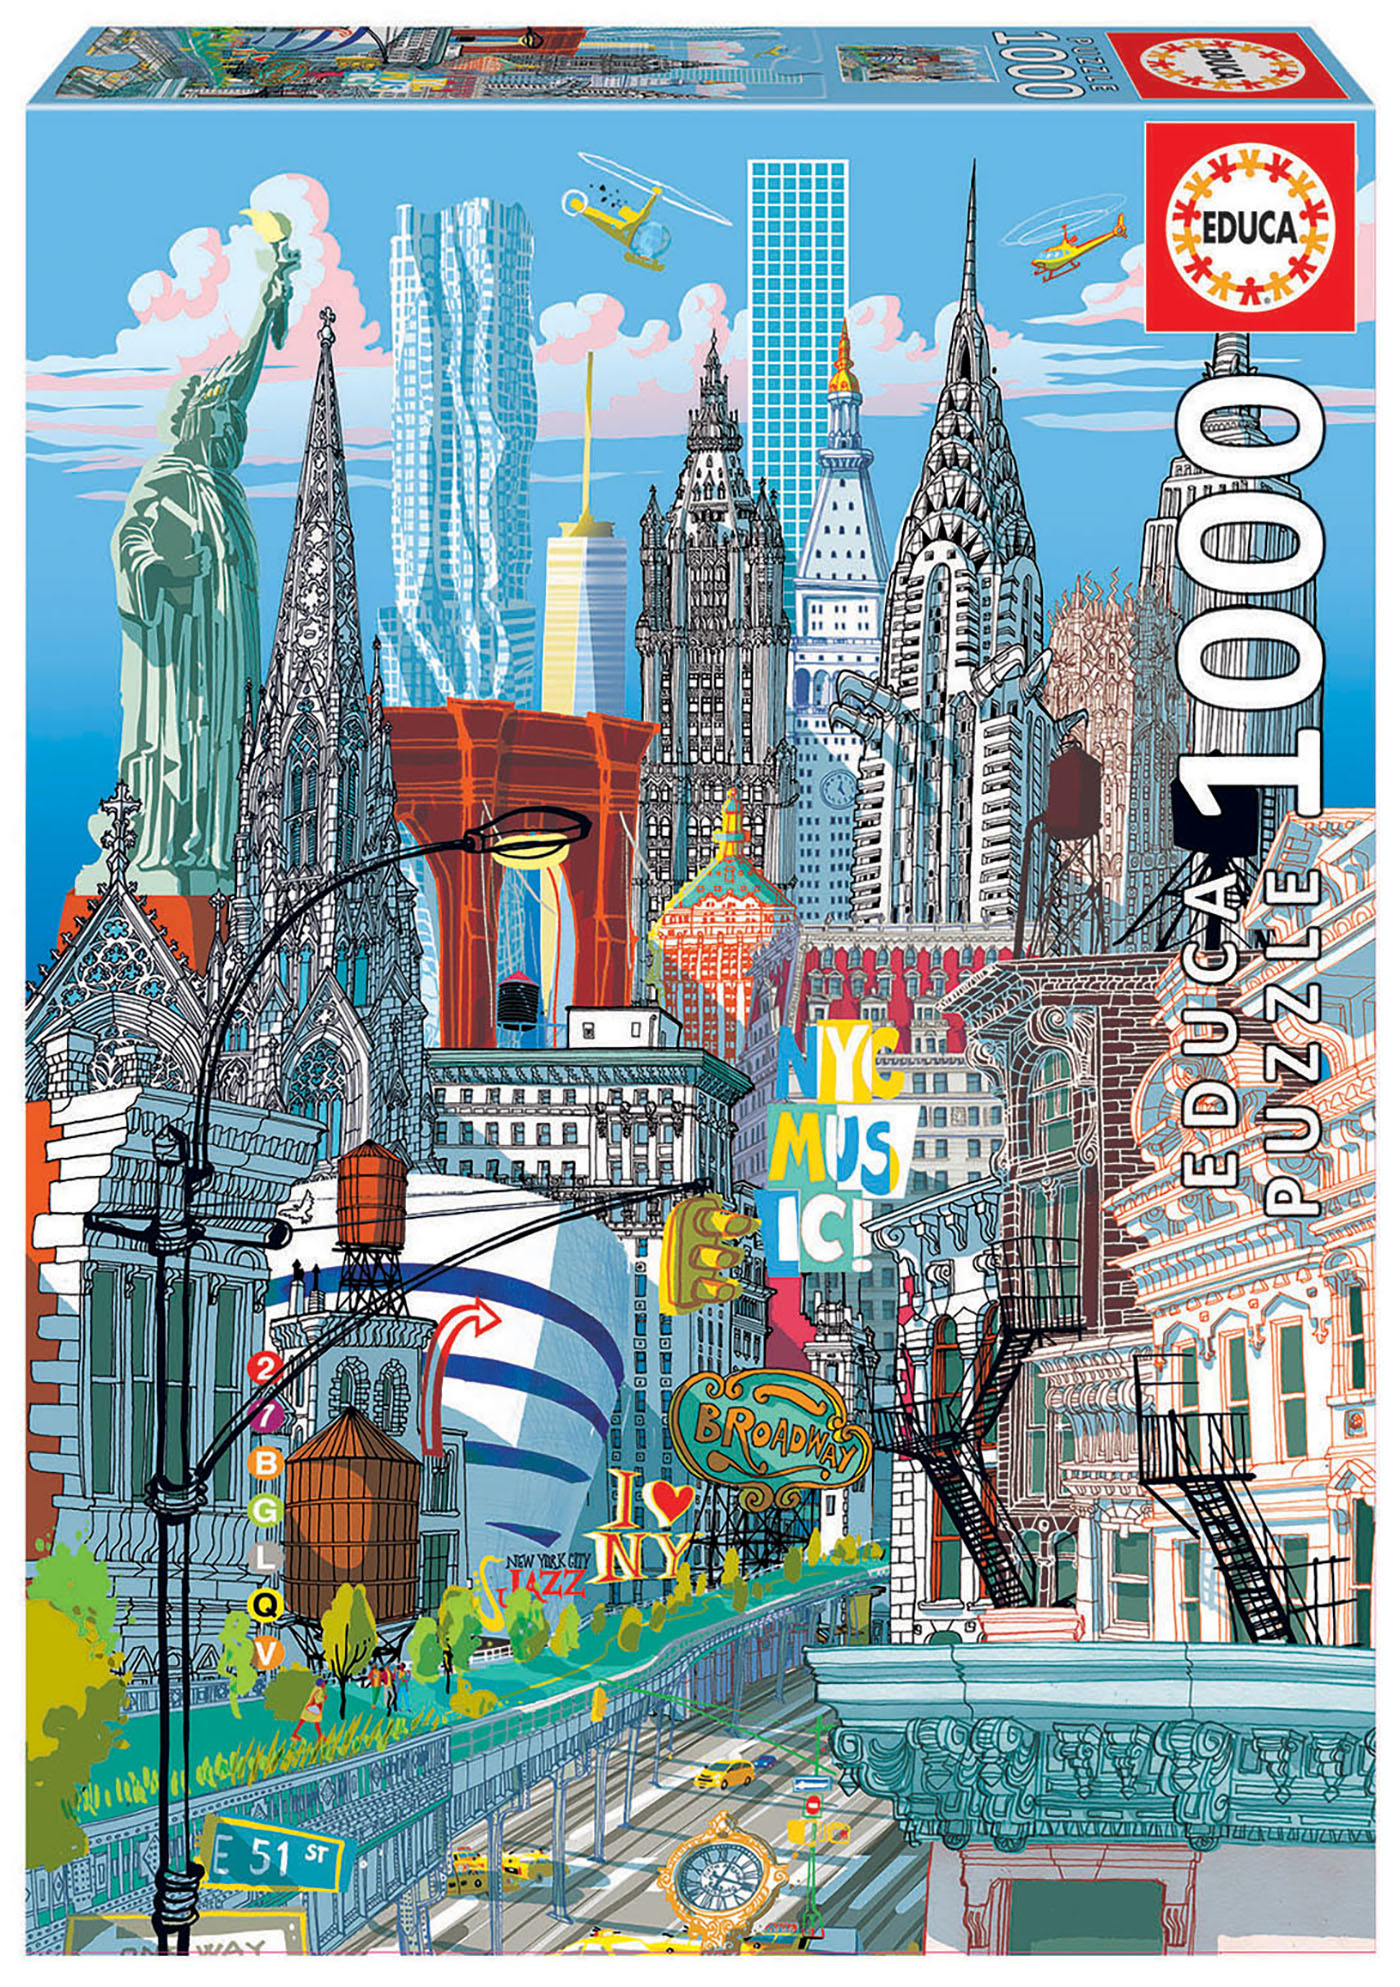 PUZZLE 1000 PIEZAS EDUCA 18456 COLLAGE DE NOTRE DAME DE PARIS Puzle 1000 piezas 